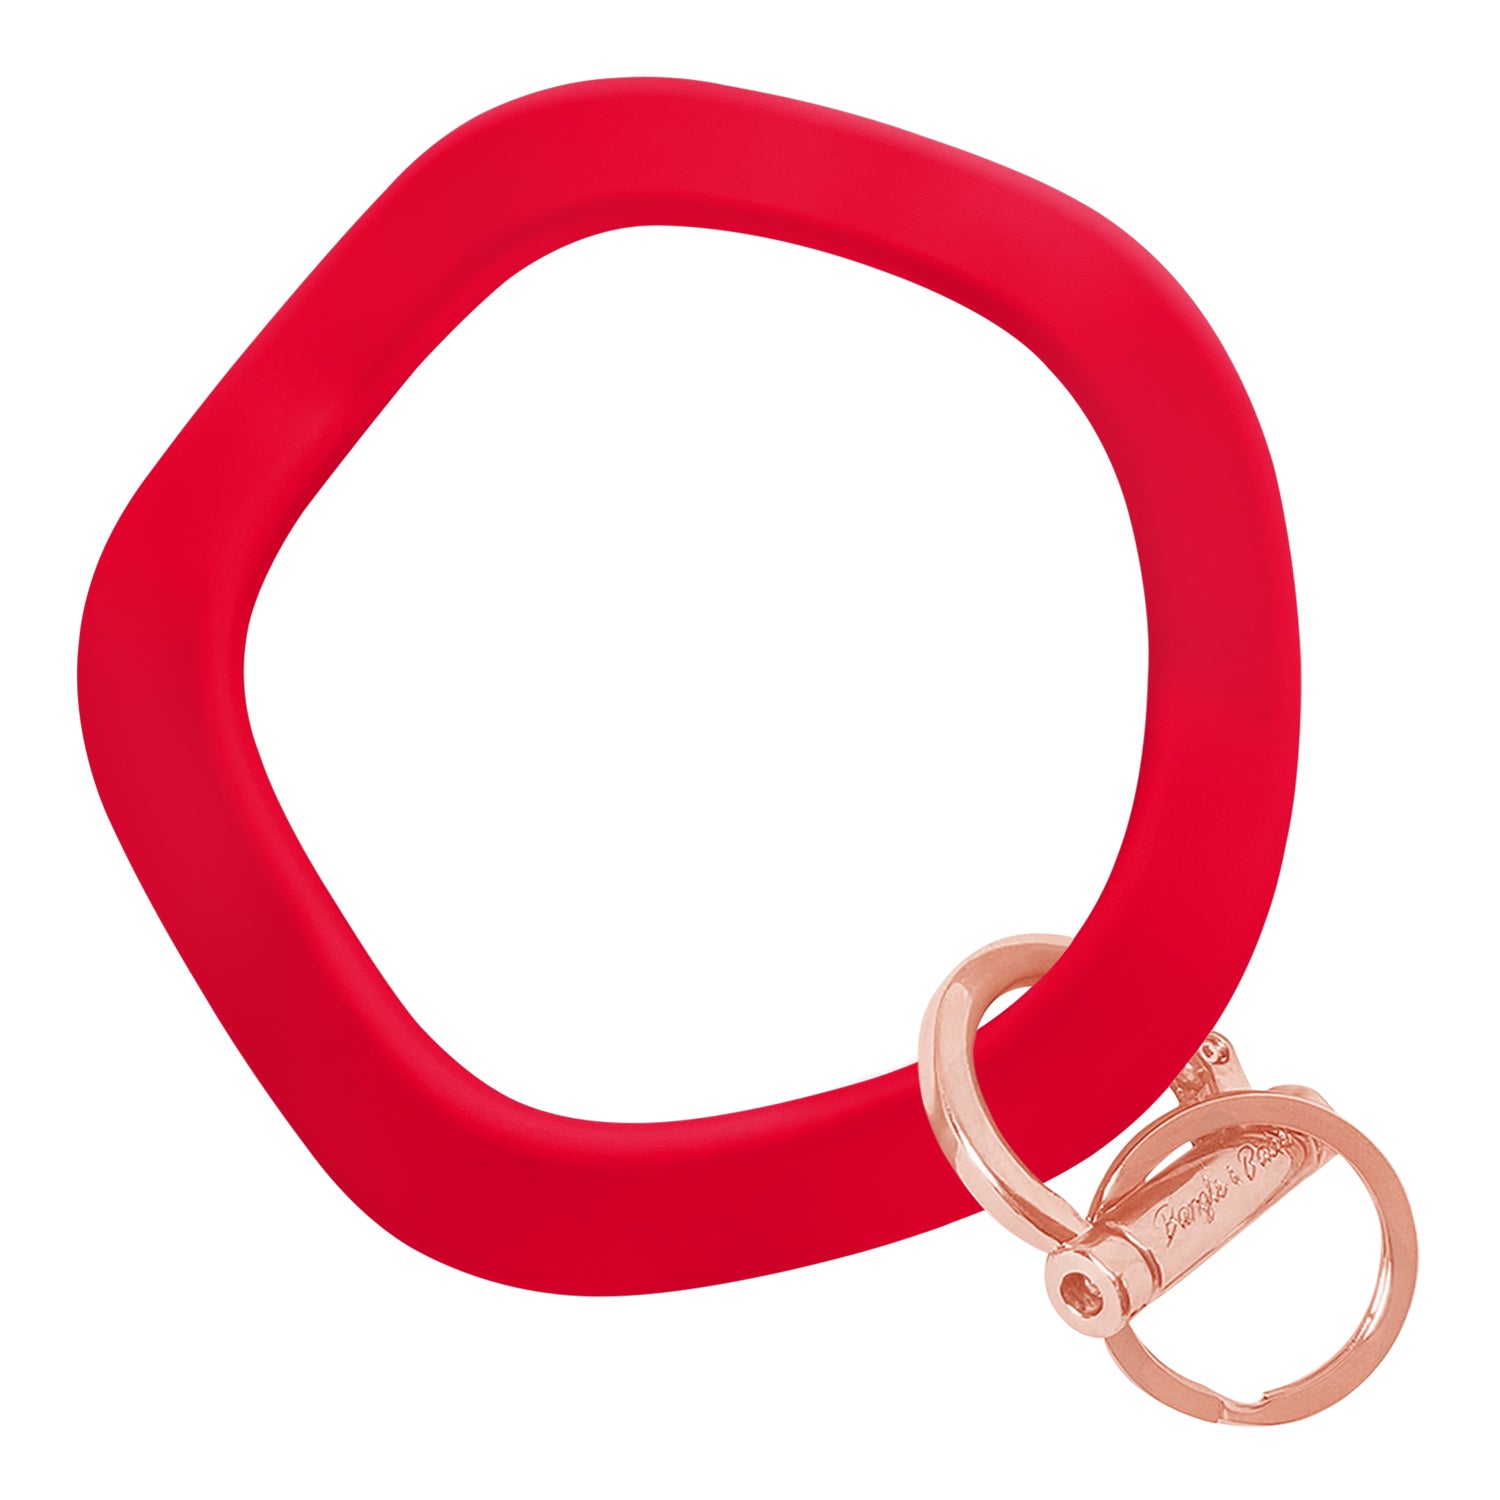 Wavy Wrist-Worn Bracelet Key Ring – Bangle & Babe Bracelet Key Ring